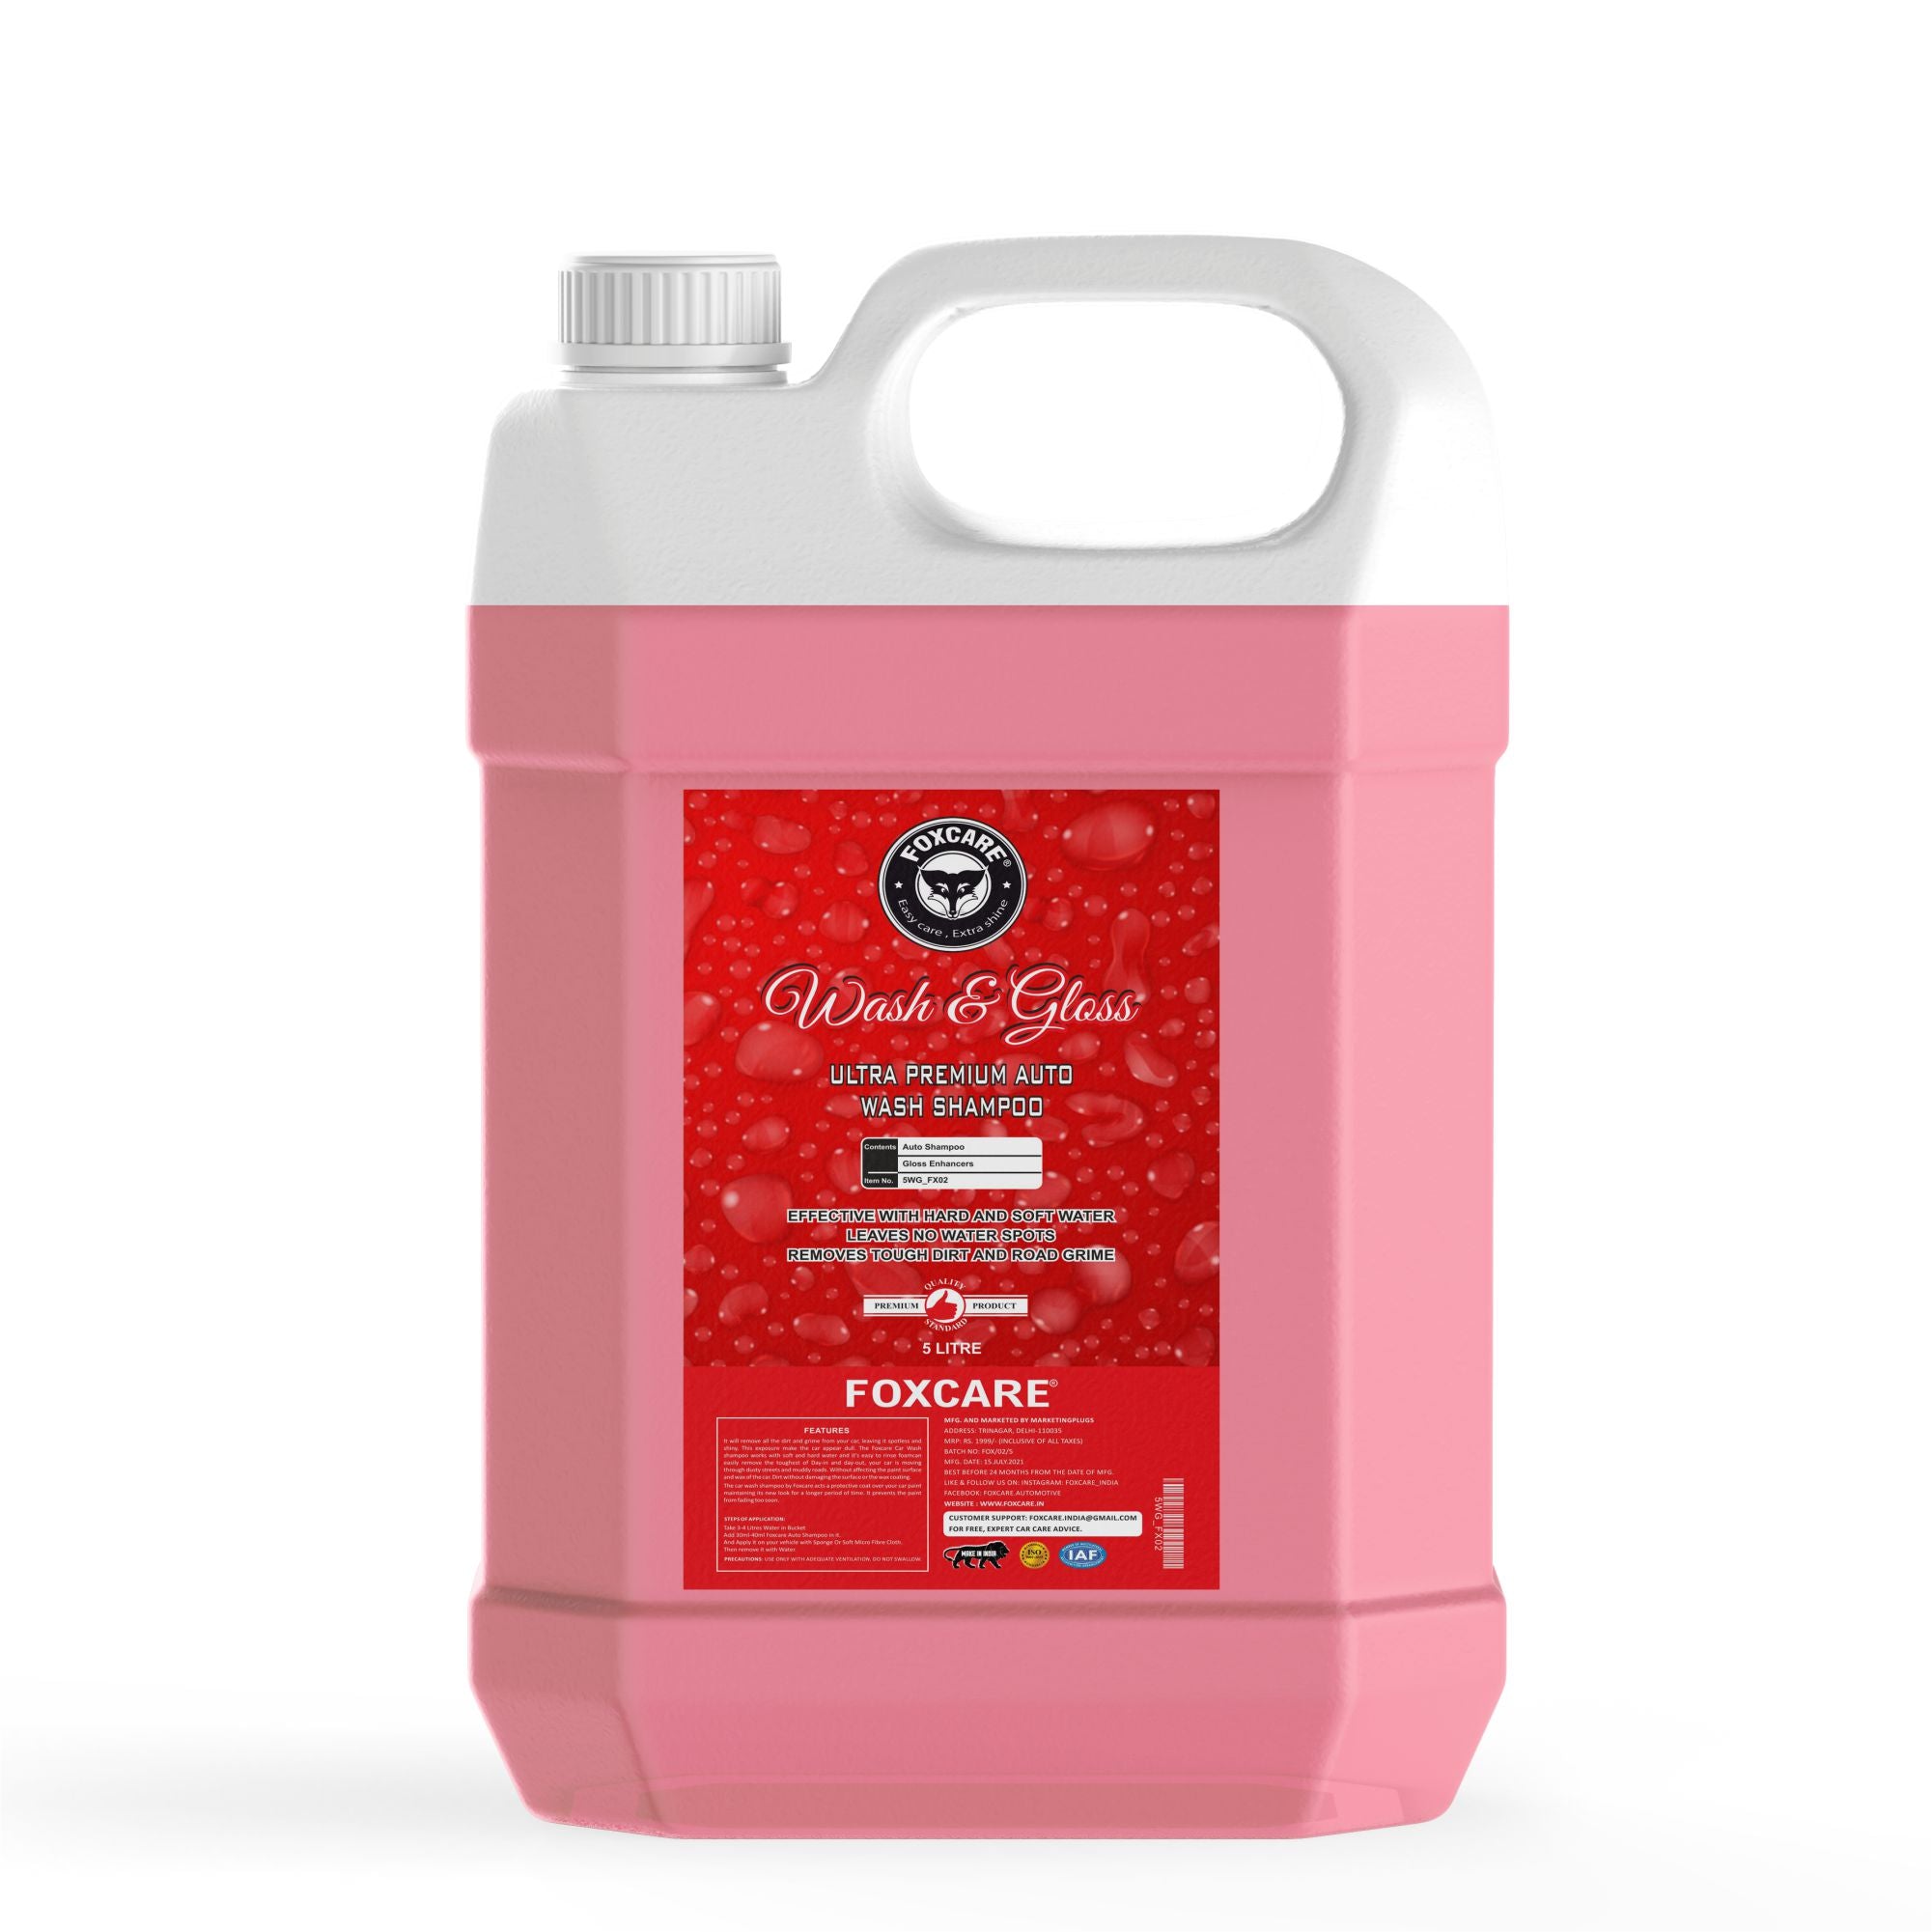 Foxcare Wash & Gloss - Ultra Premium Auto wash Shampoo (5 KG)